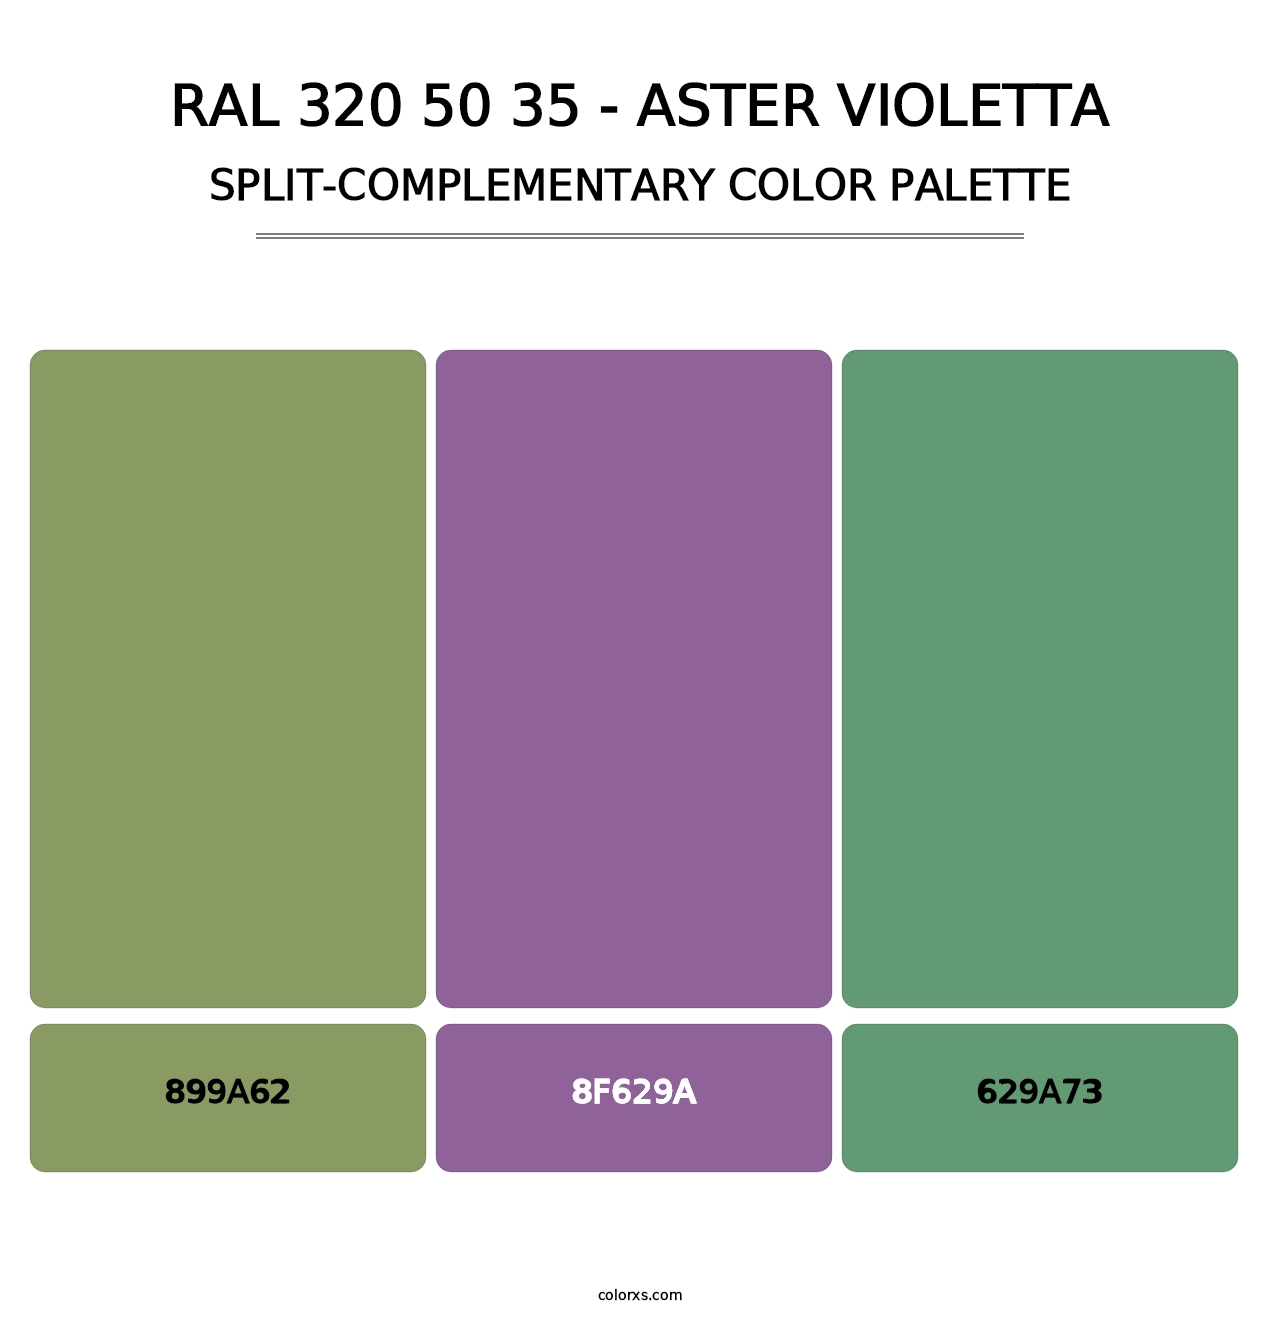 RAL 320 50 35 - Aster Violetta - Split-Complementary Color Palette